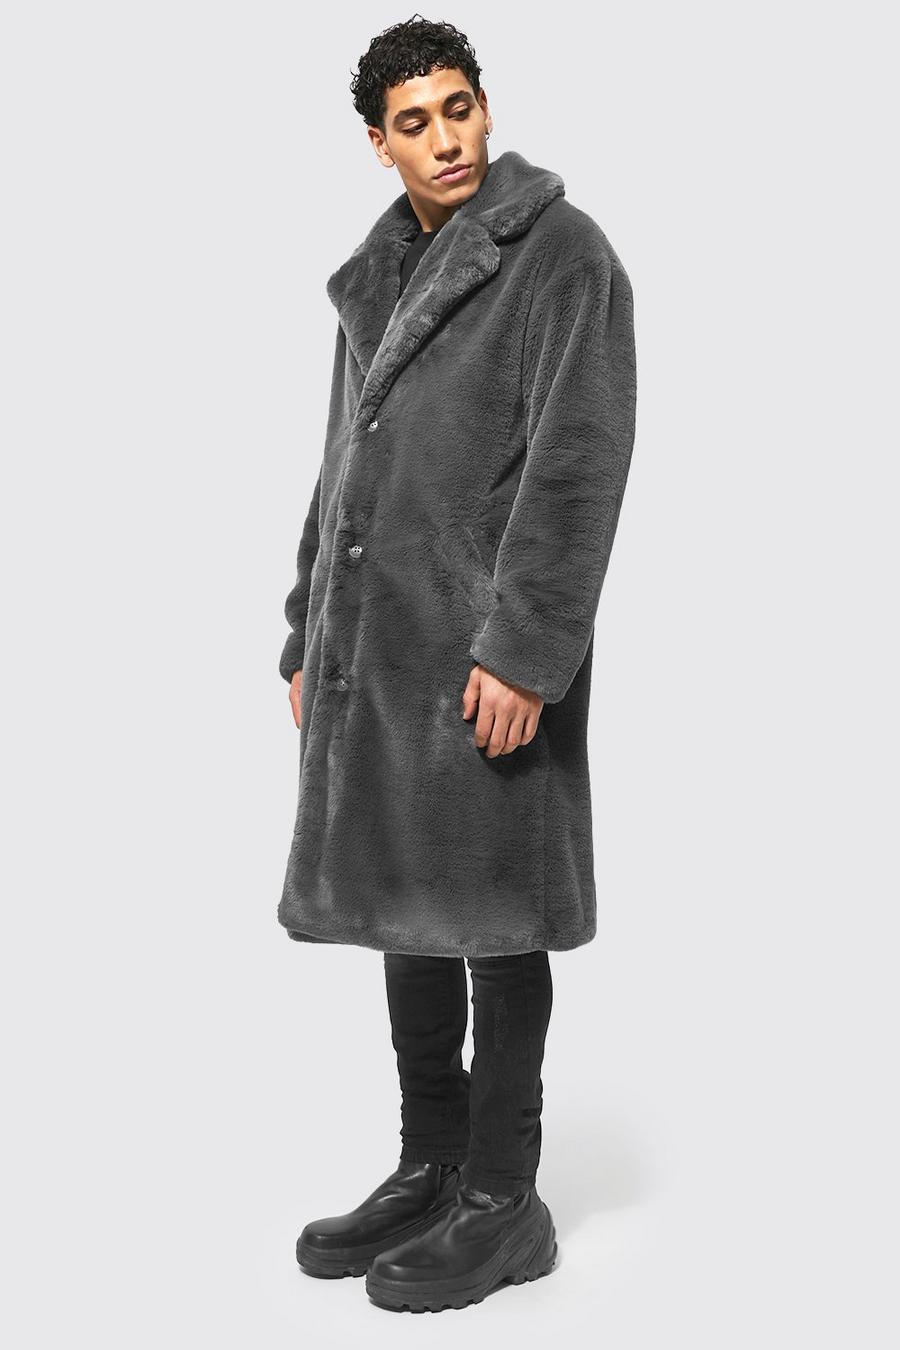 Charcoal grey Plain Faux Fur Coat